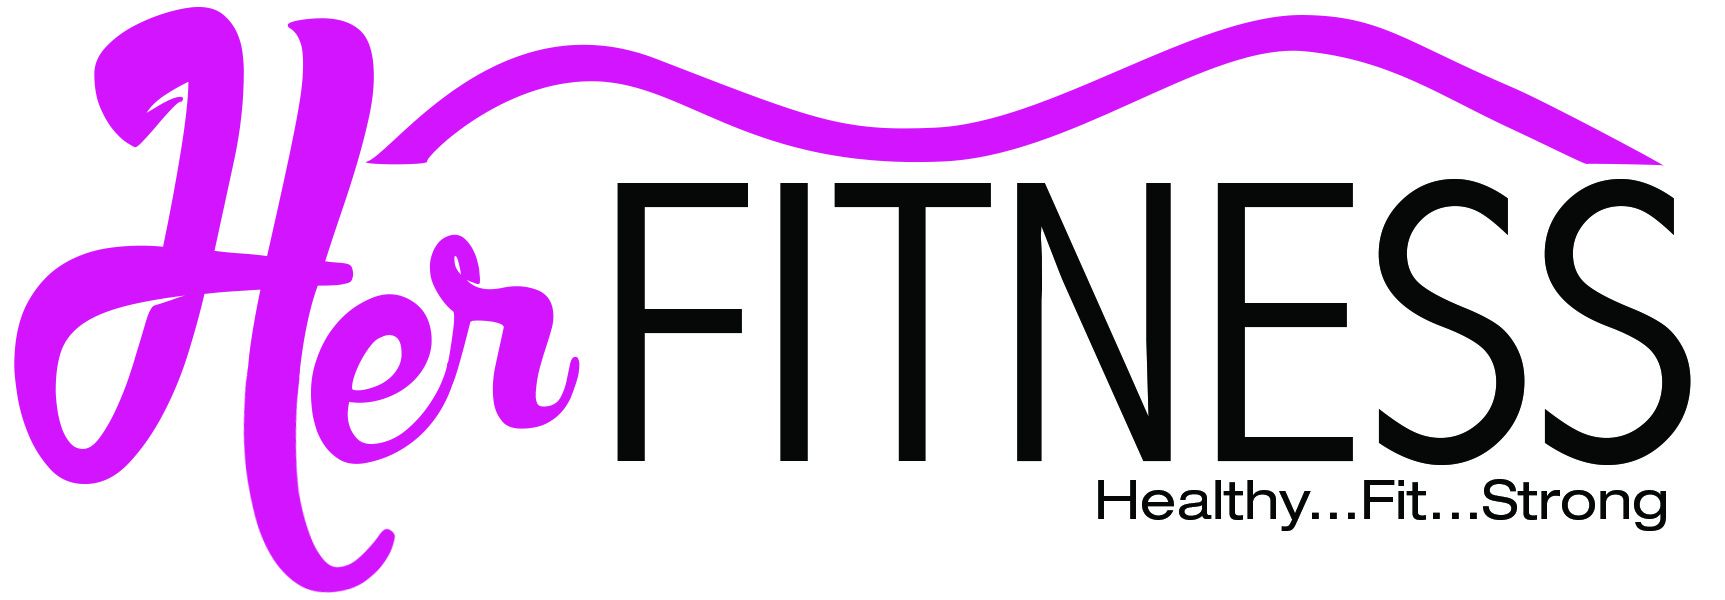 HerFintness Logo